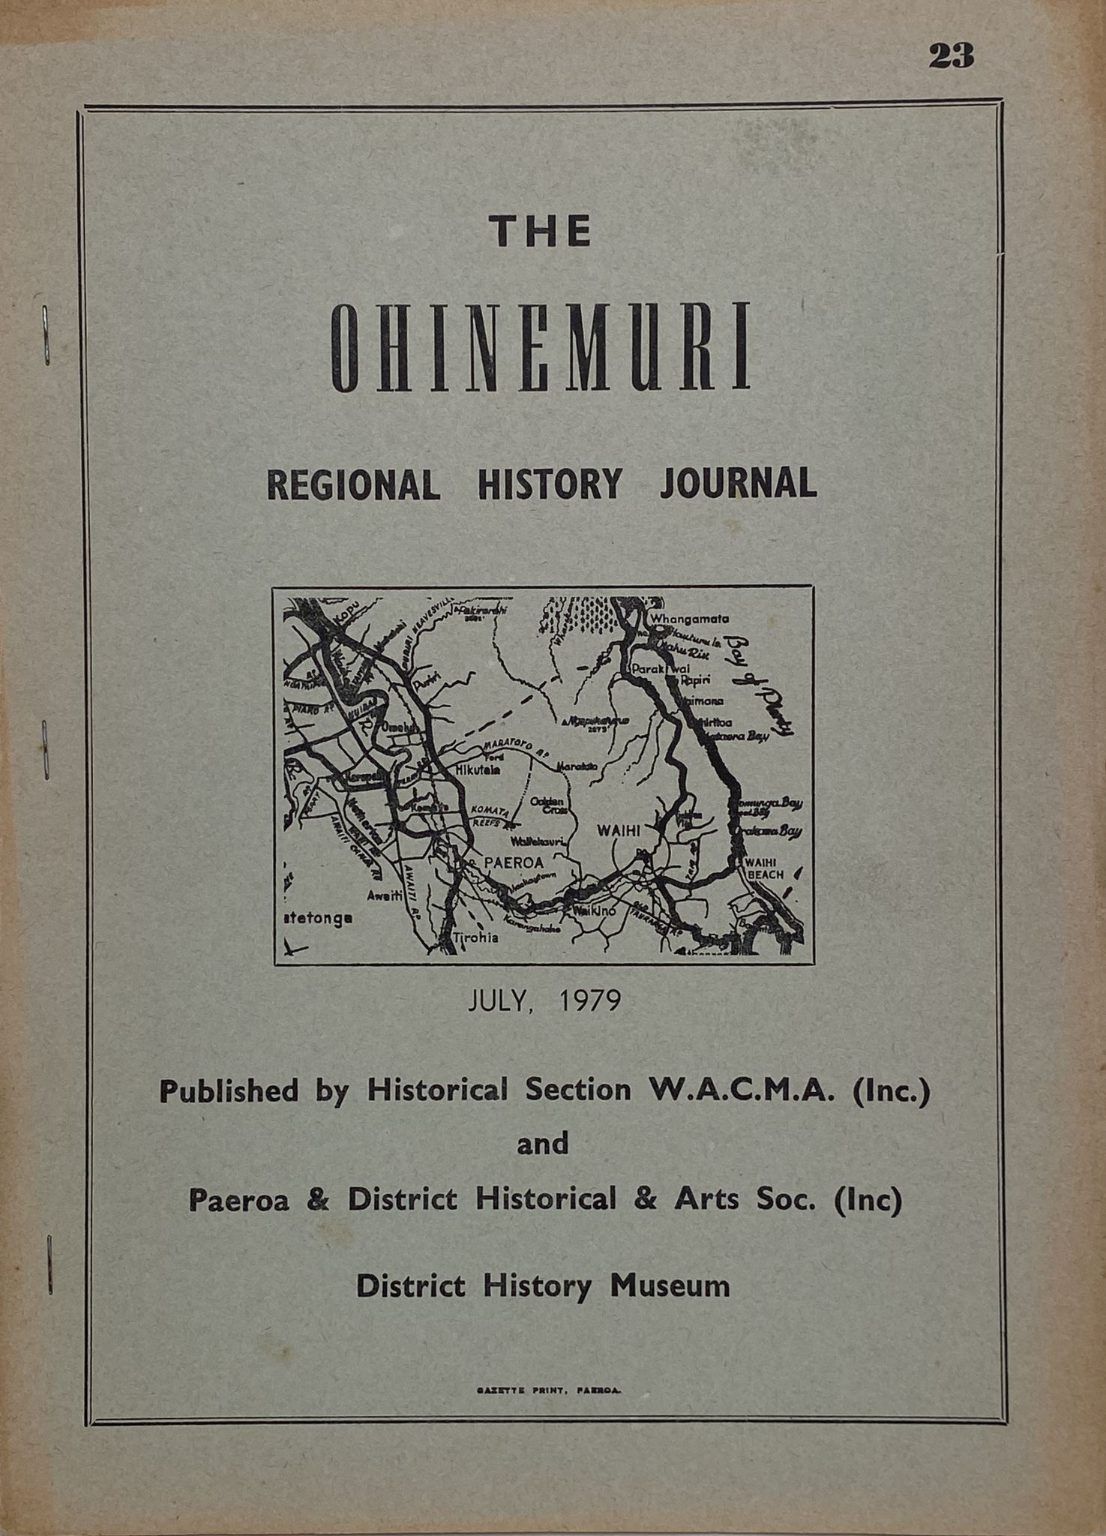 THE OHINEMURI REGIONAL HISTORIC JOURNAL: July 1979